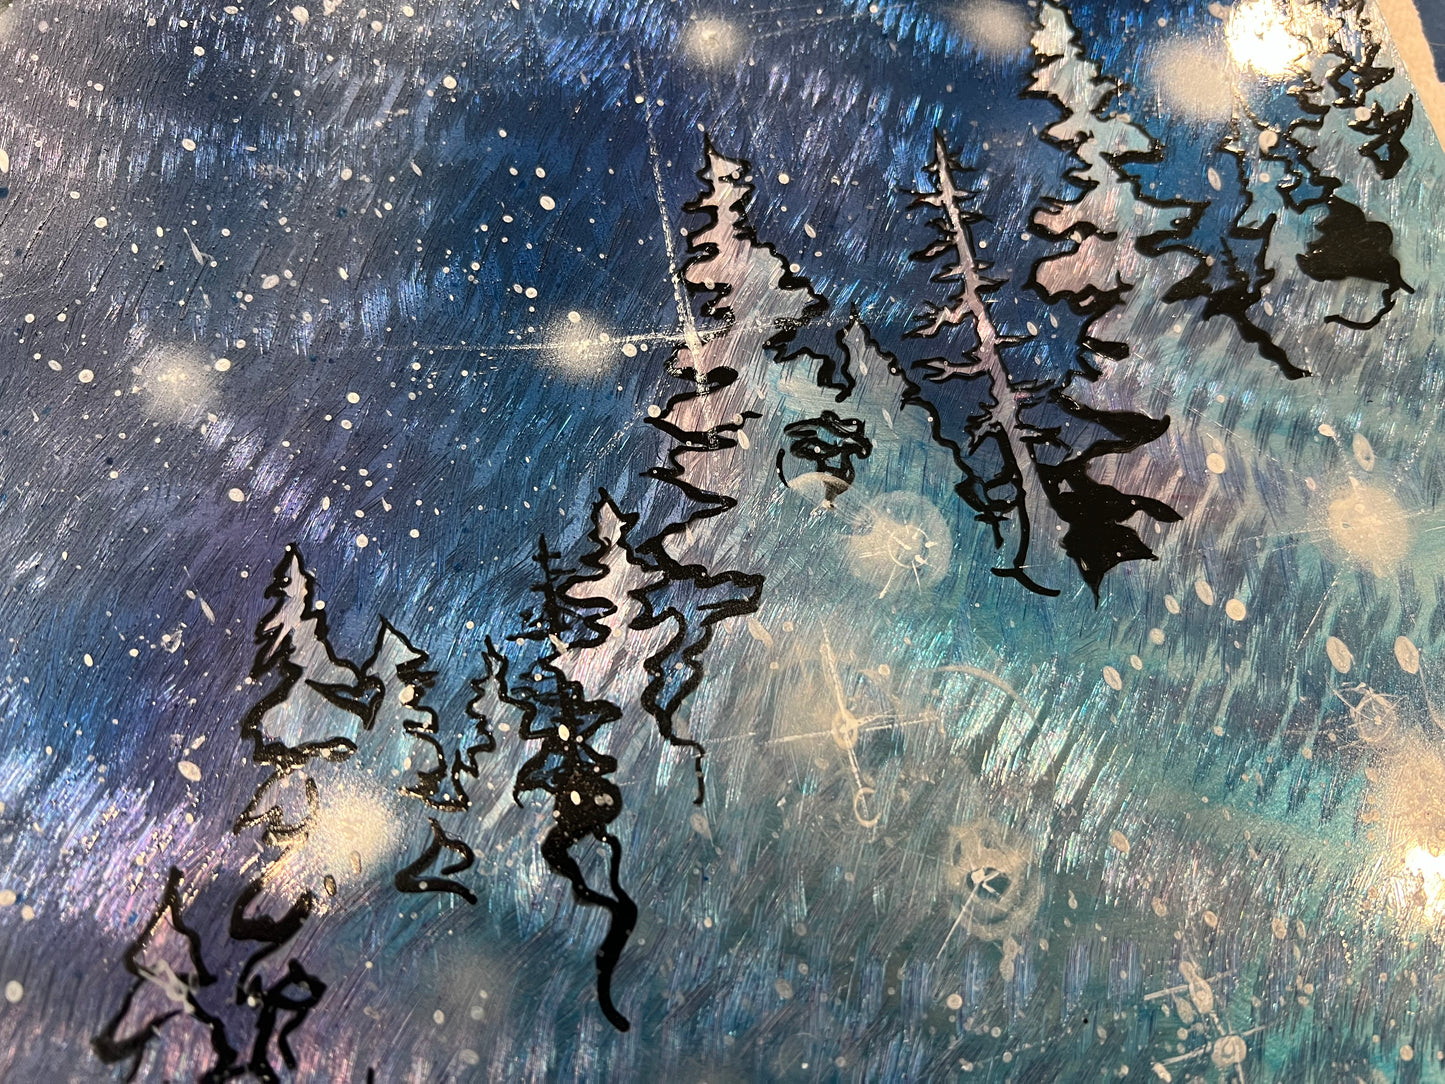 Original Metal Painting Art, Twilight magical colors "Secret Wonders" winter snowstorm gondola ride art OOAK by Christie Marie E. Russell